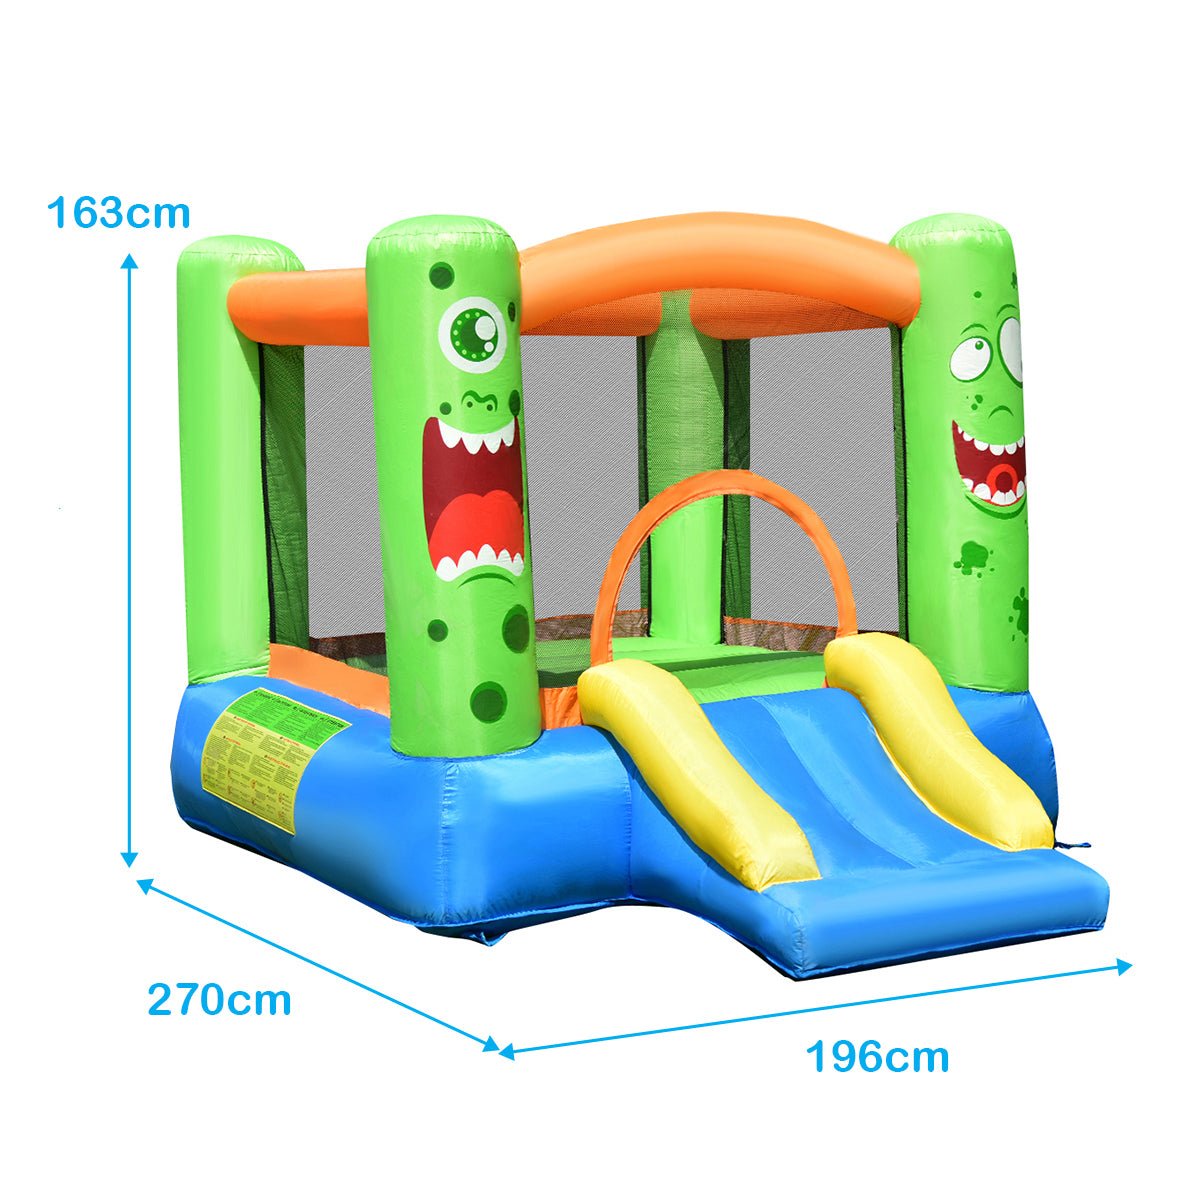 Joyful Jumping: Inflatable Bounce Playhouse with Slide & Basketball Rim